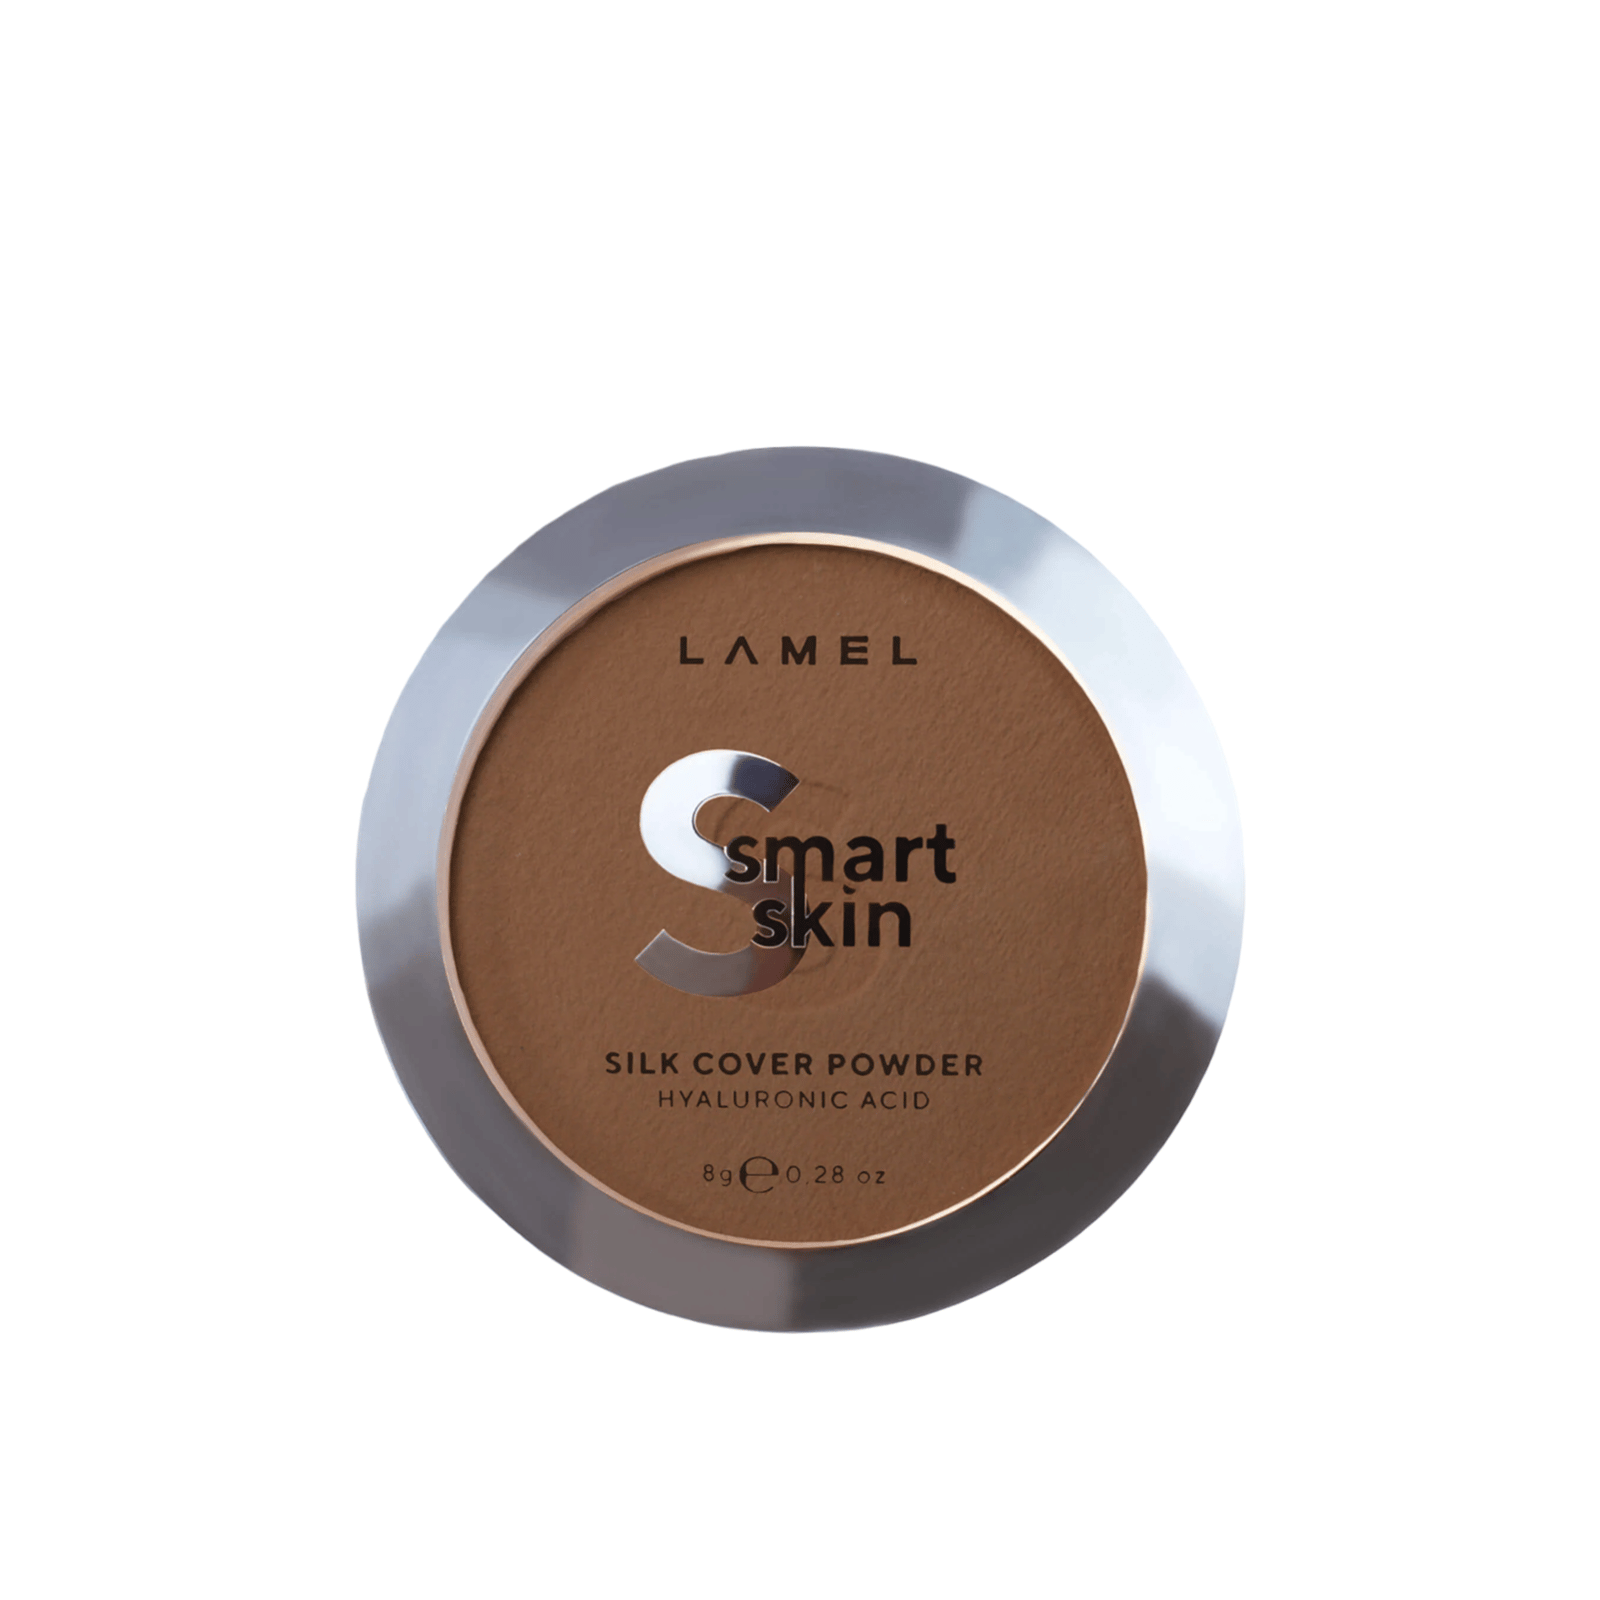 Lamel Smart Skin Silk Cover Powder 406 Deep Brown 8g (0.28oz)